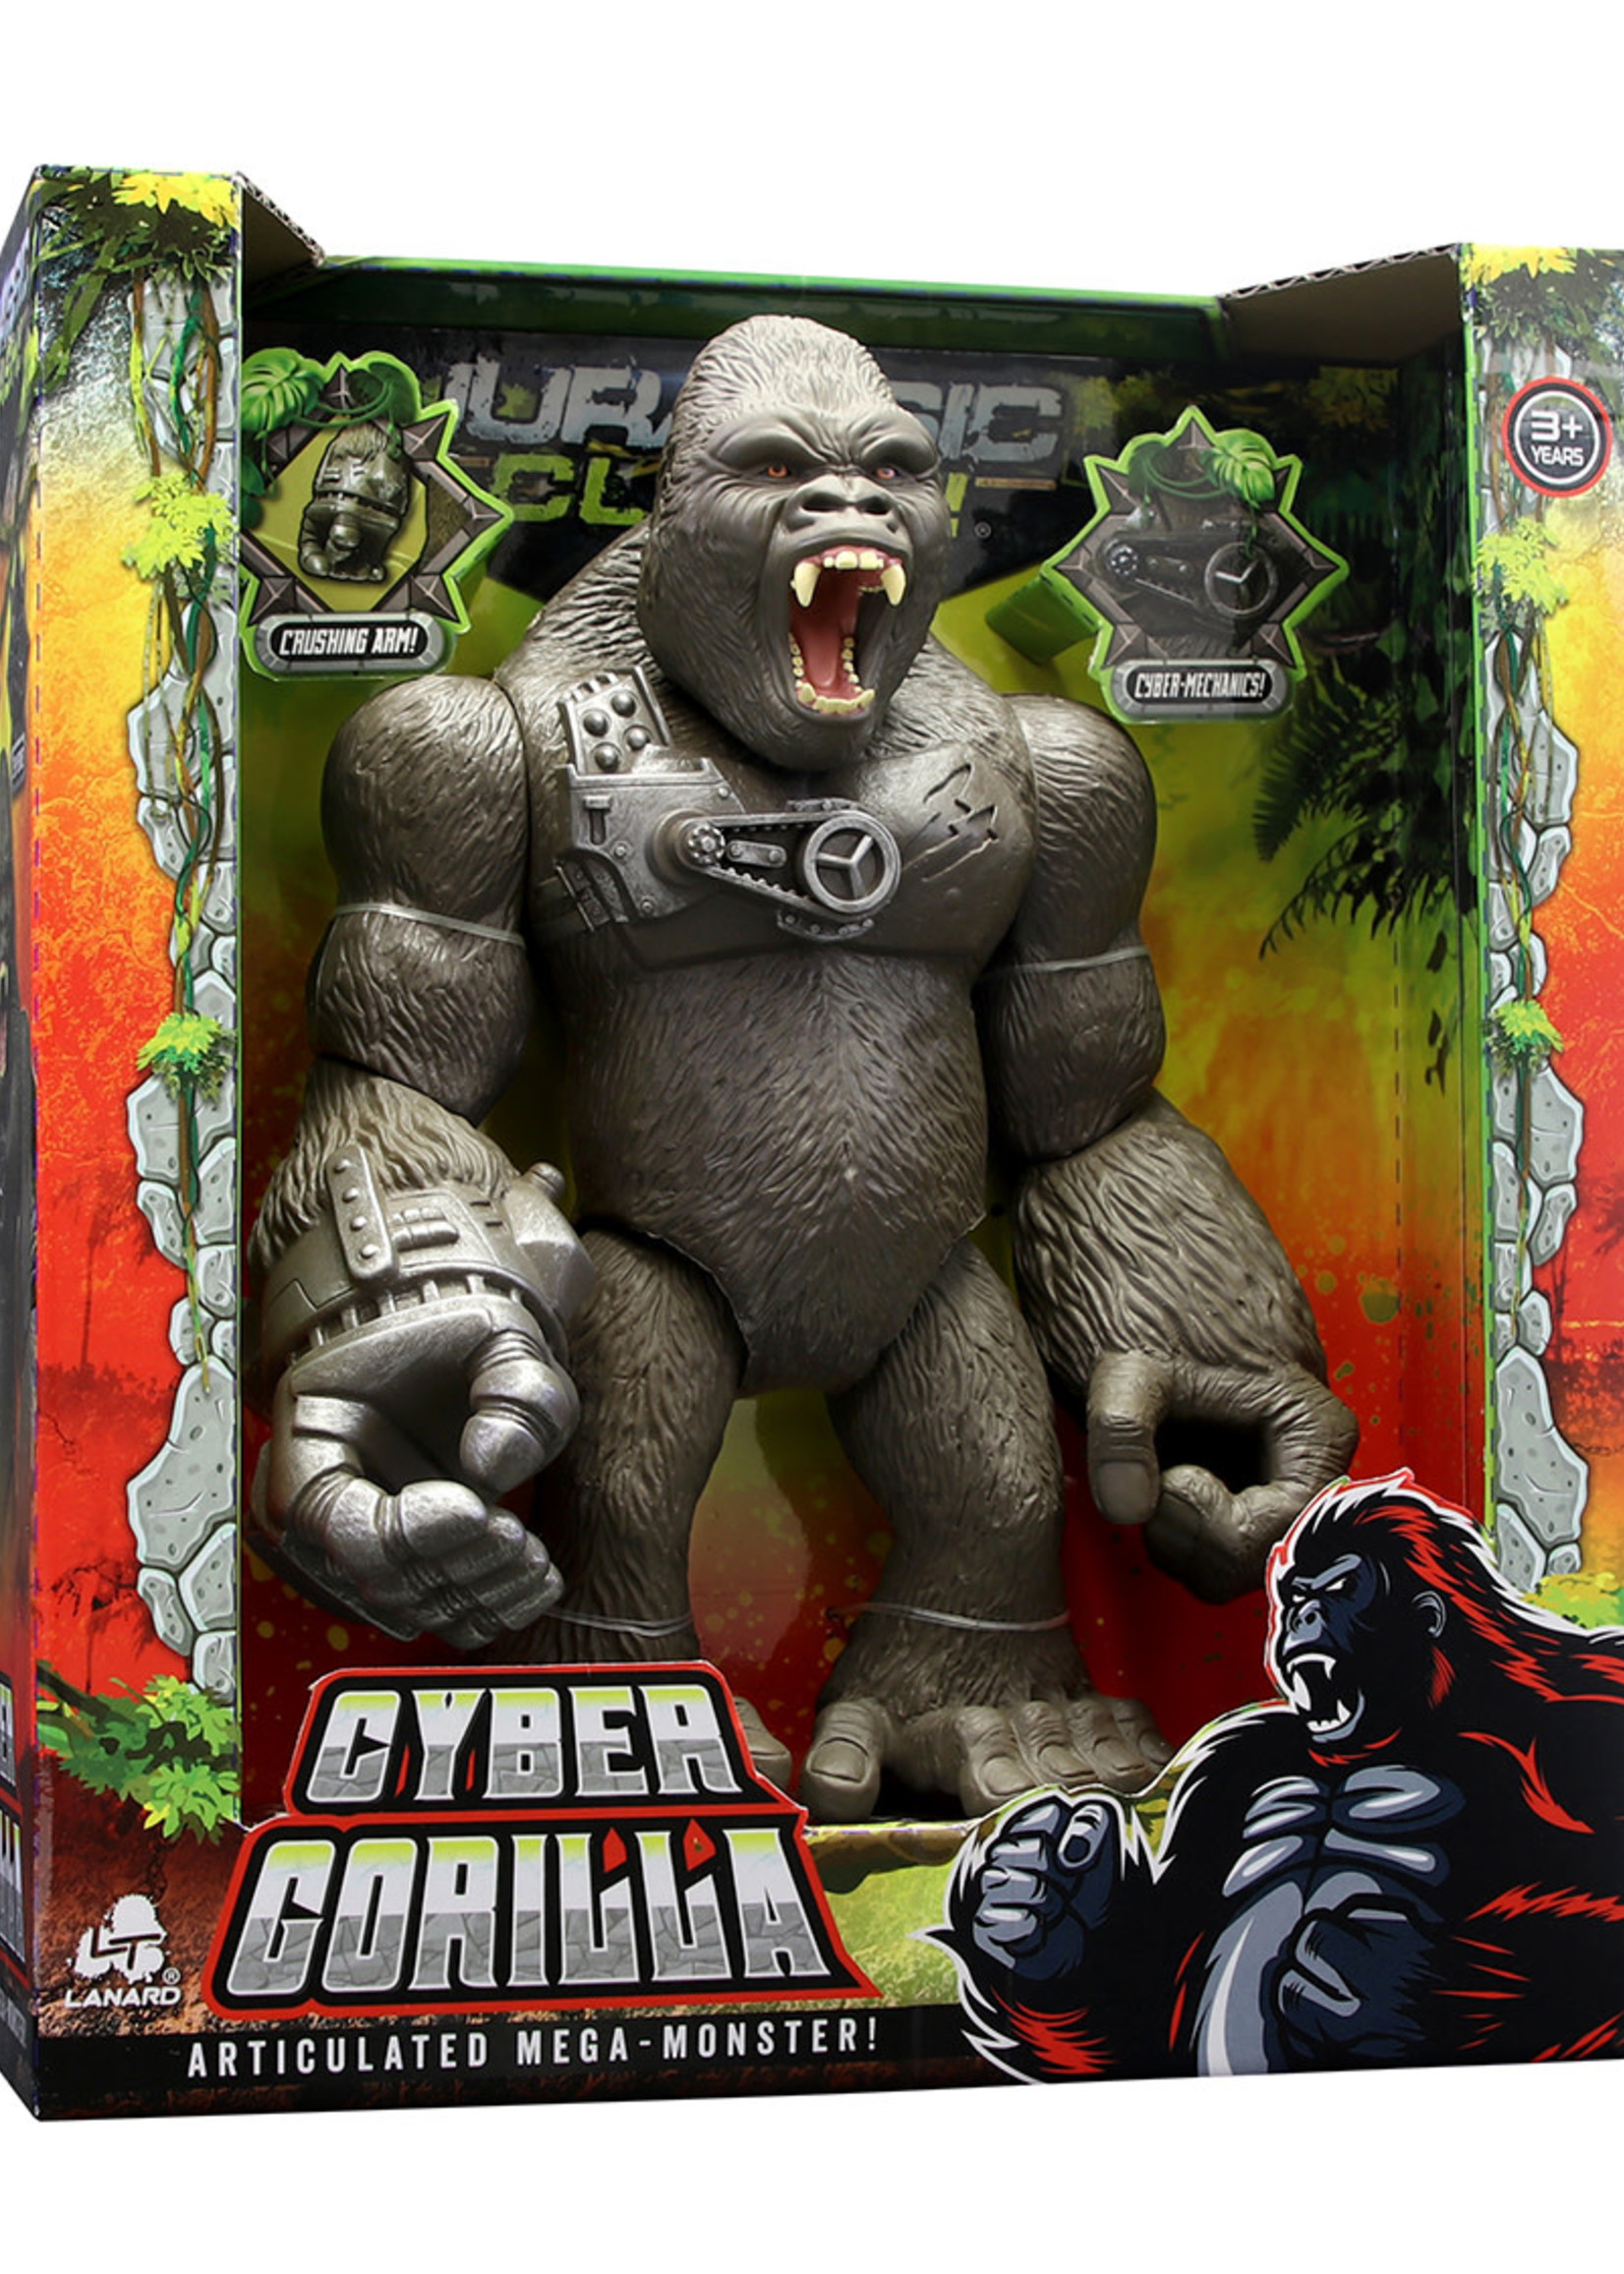 Lanard Cyber Gorilla - Articulated mega-monster!